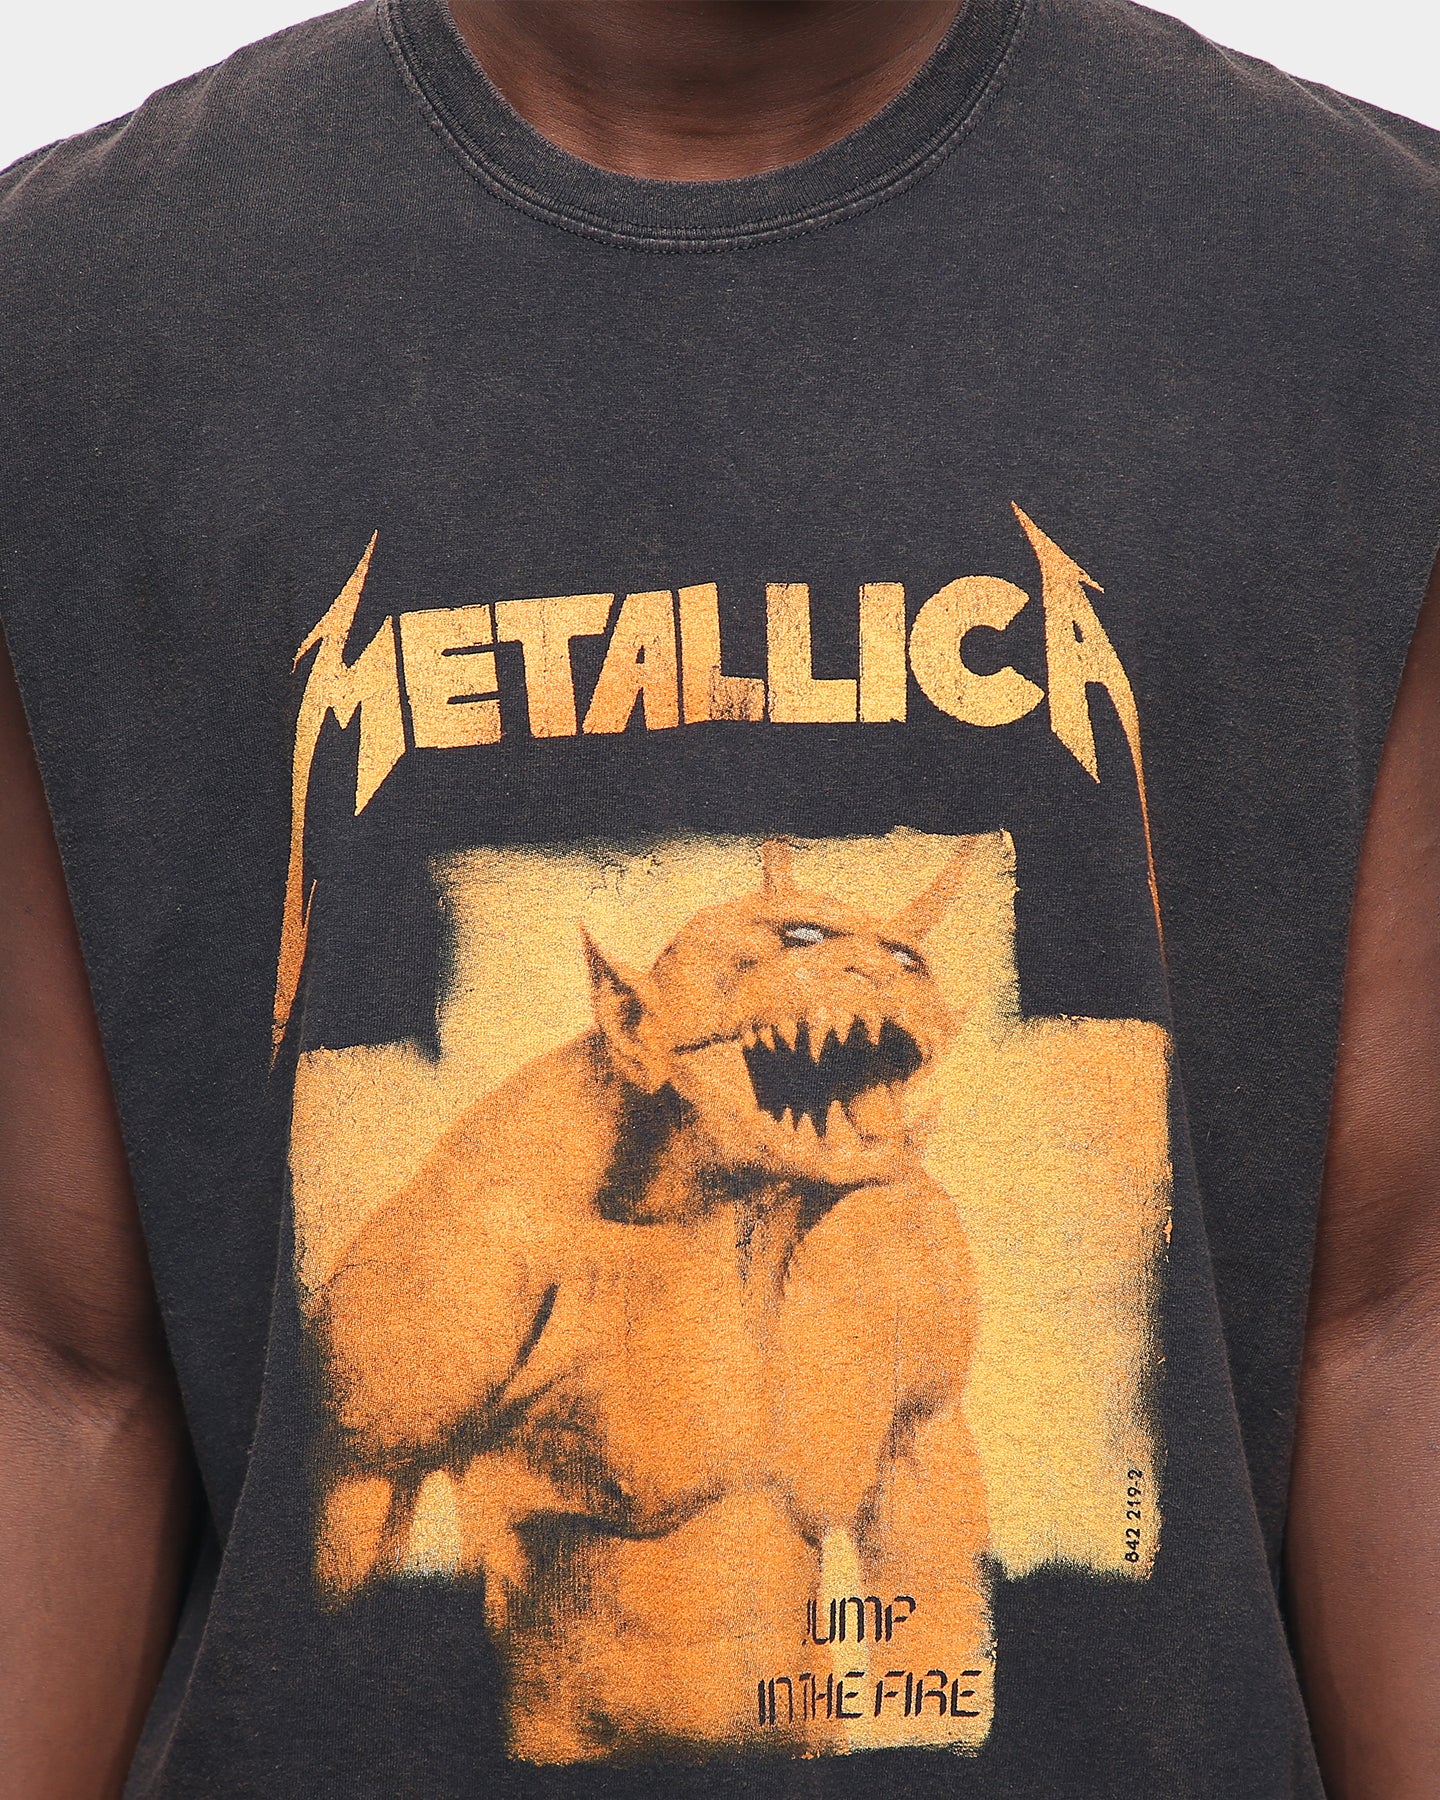 Jump in the Fire T Shirt S-5XL 100% cotton yellow black Metallica